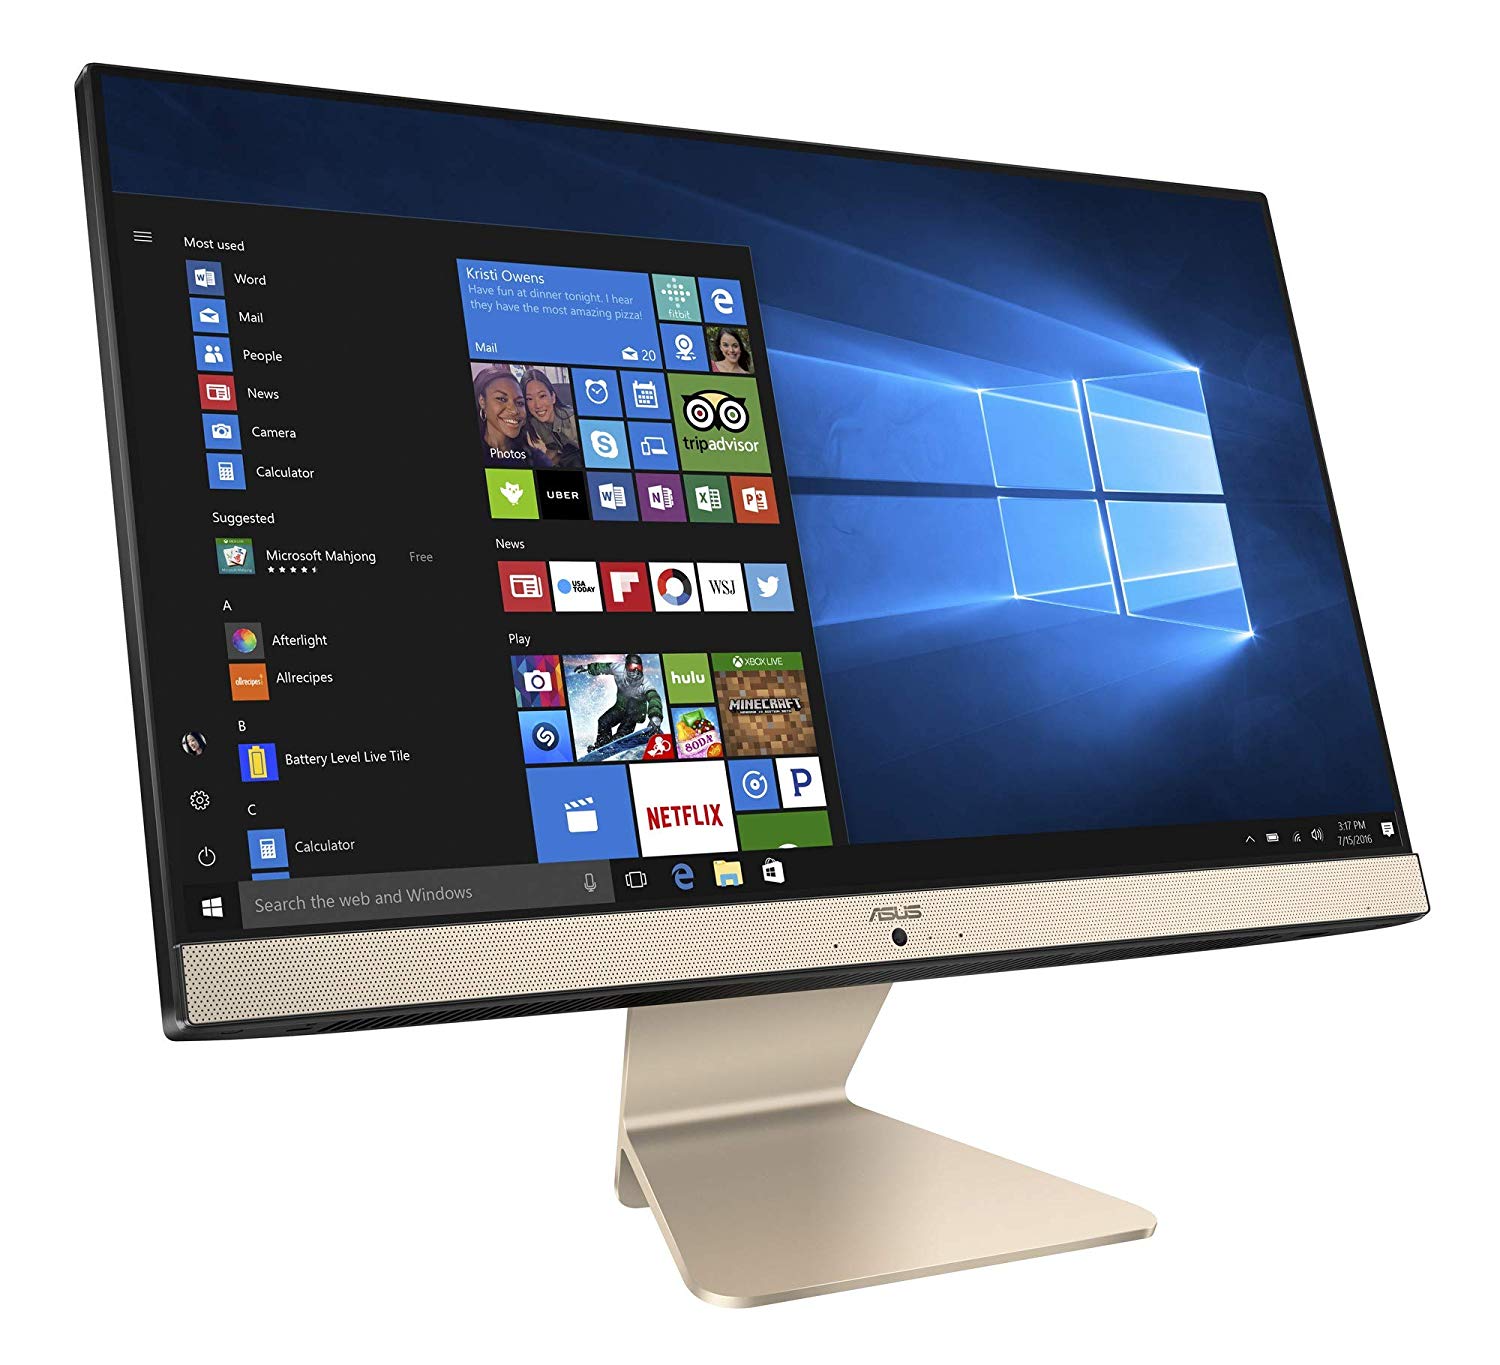 Asus Vivo All-in-One Desktop (Core i3-8130U/4GB/1TB